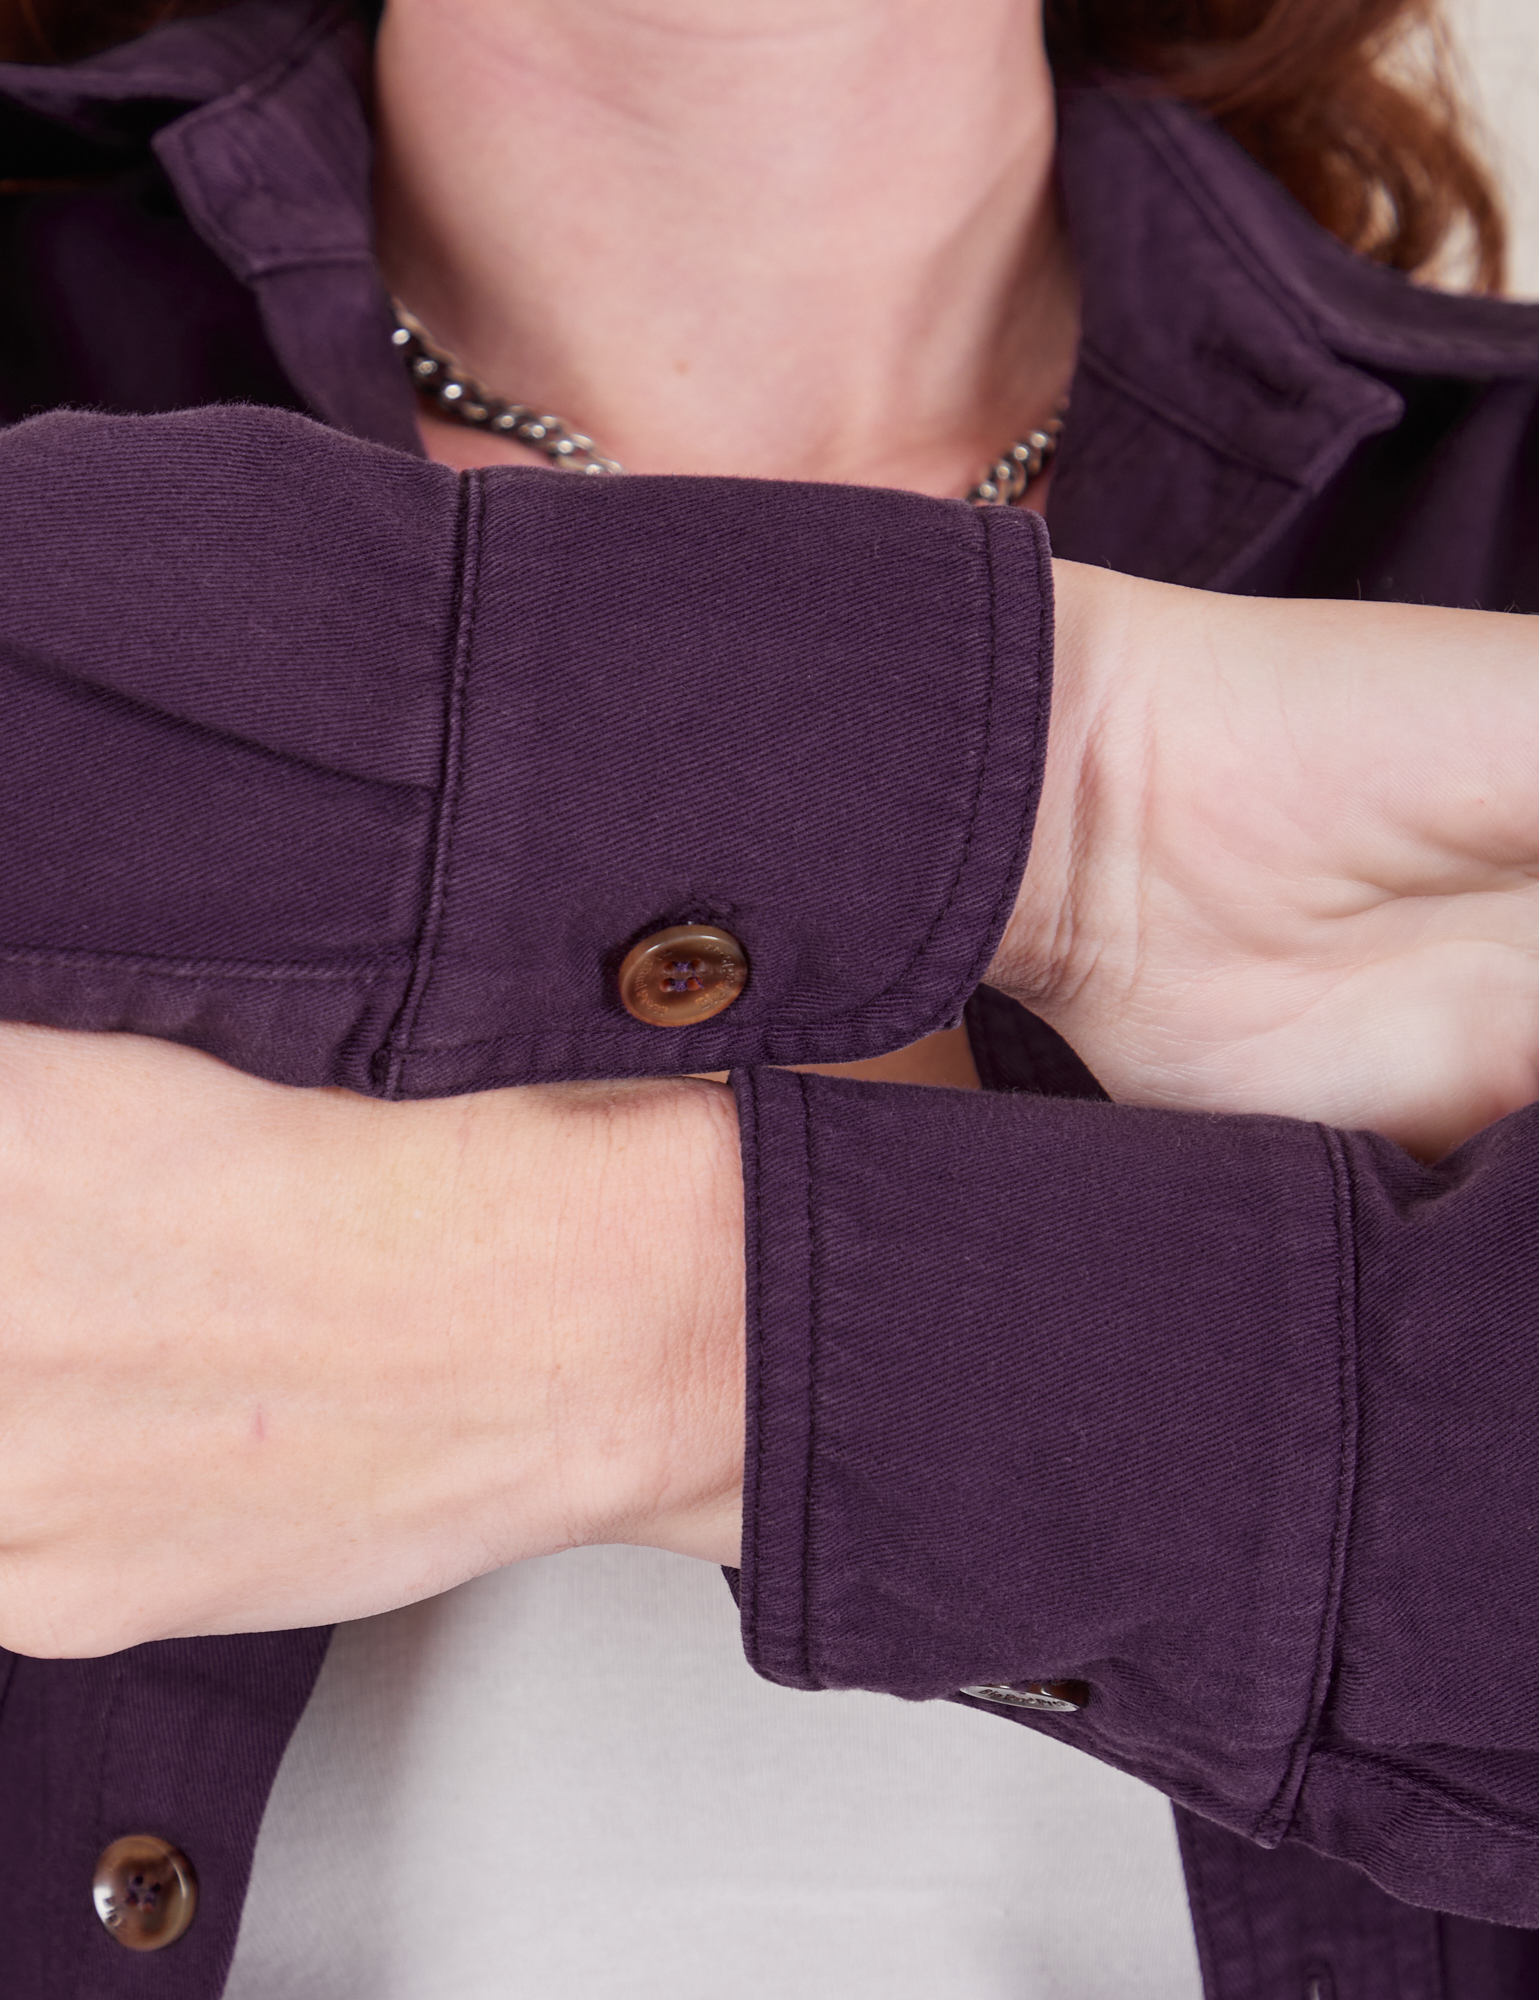 Oversize Overshirt in Nebula Purple sleeve cuff close up on Alex